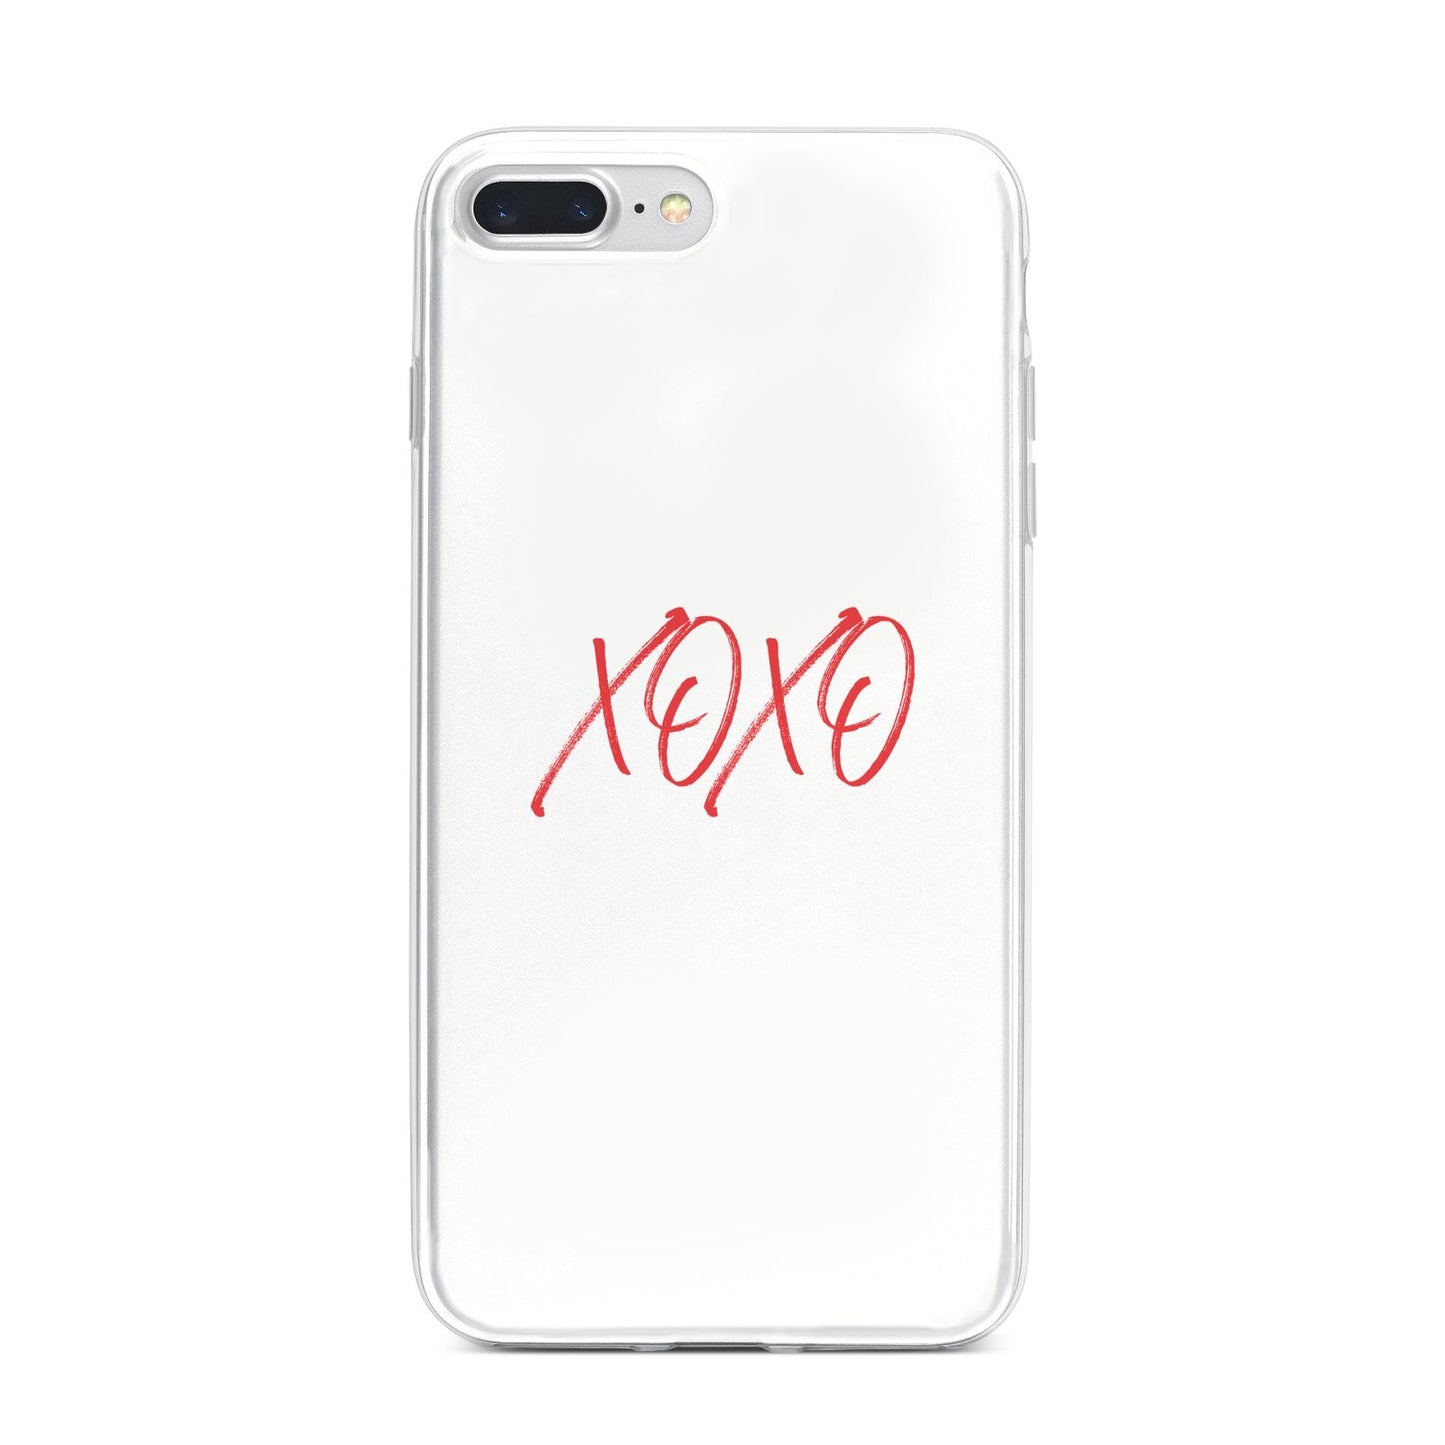 I love you like xo iPhone 7 Plus Bumper Case on Silver iPhone